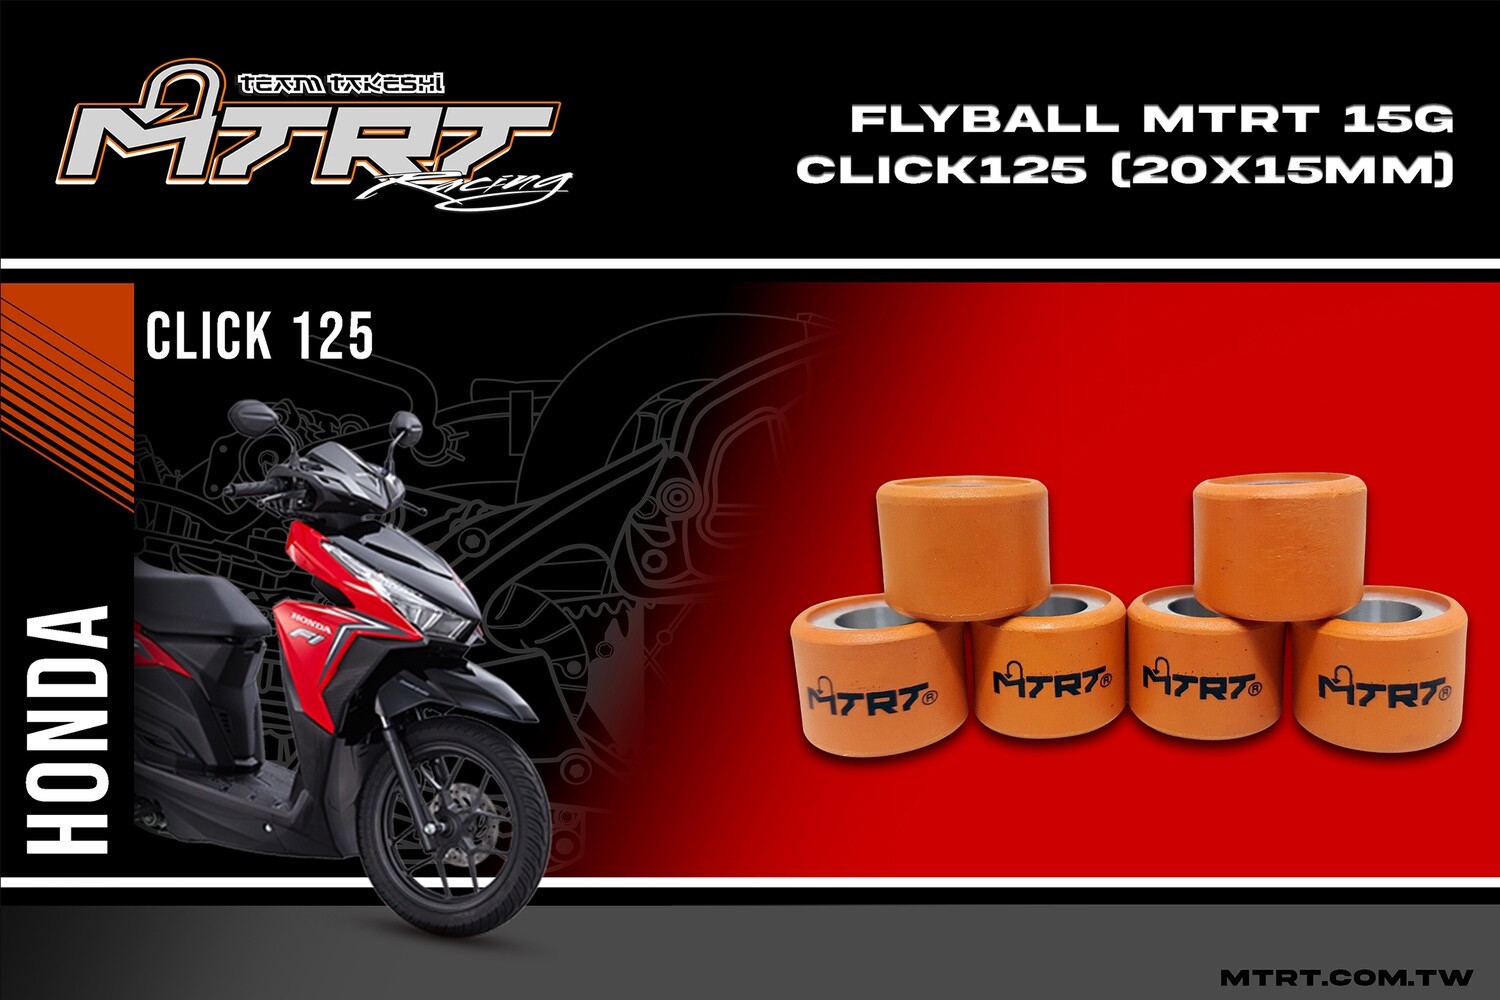 FLYBALL  MTRT  Click125DinkStepRV  15G (20x15mm)